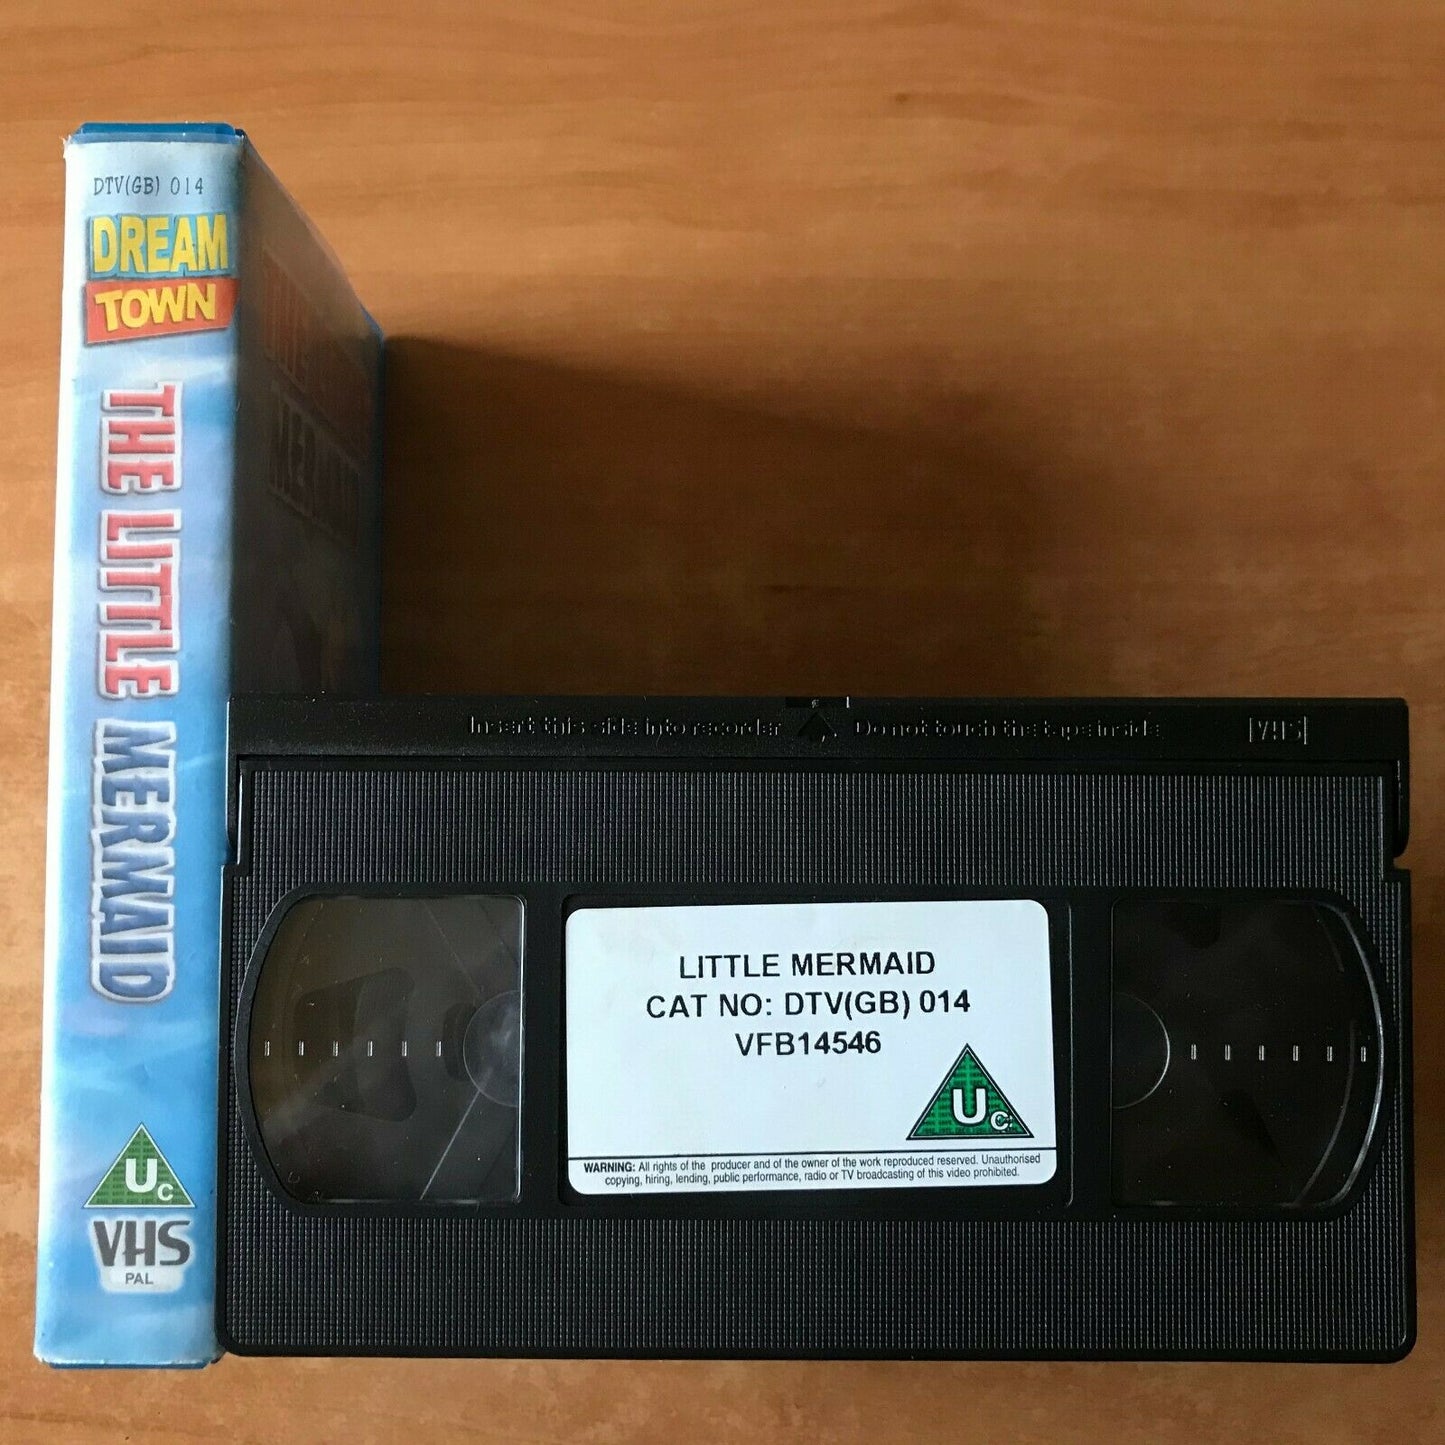 The Little Mermaid; [Dream Town]: Hans Christian Andersen - Children's - Pal VHS-